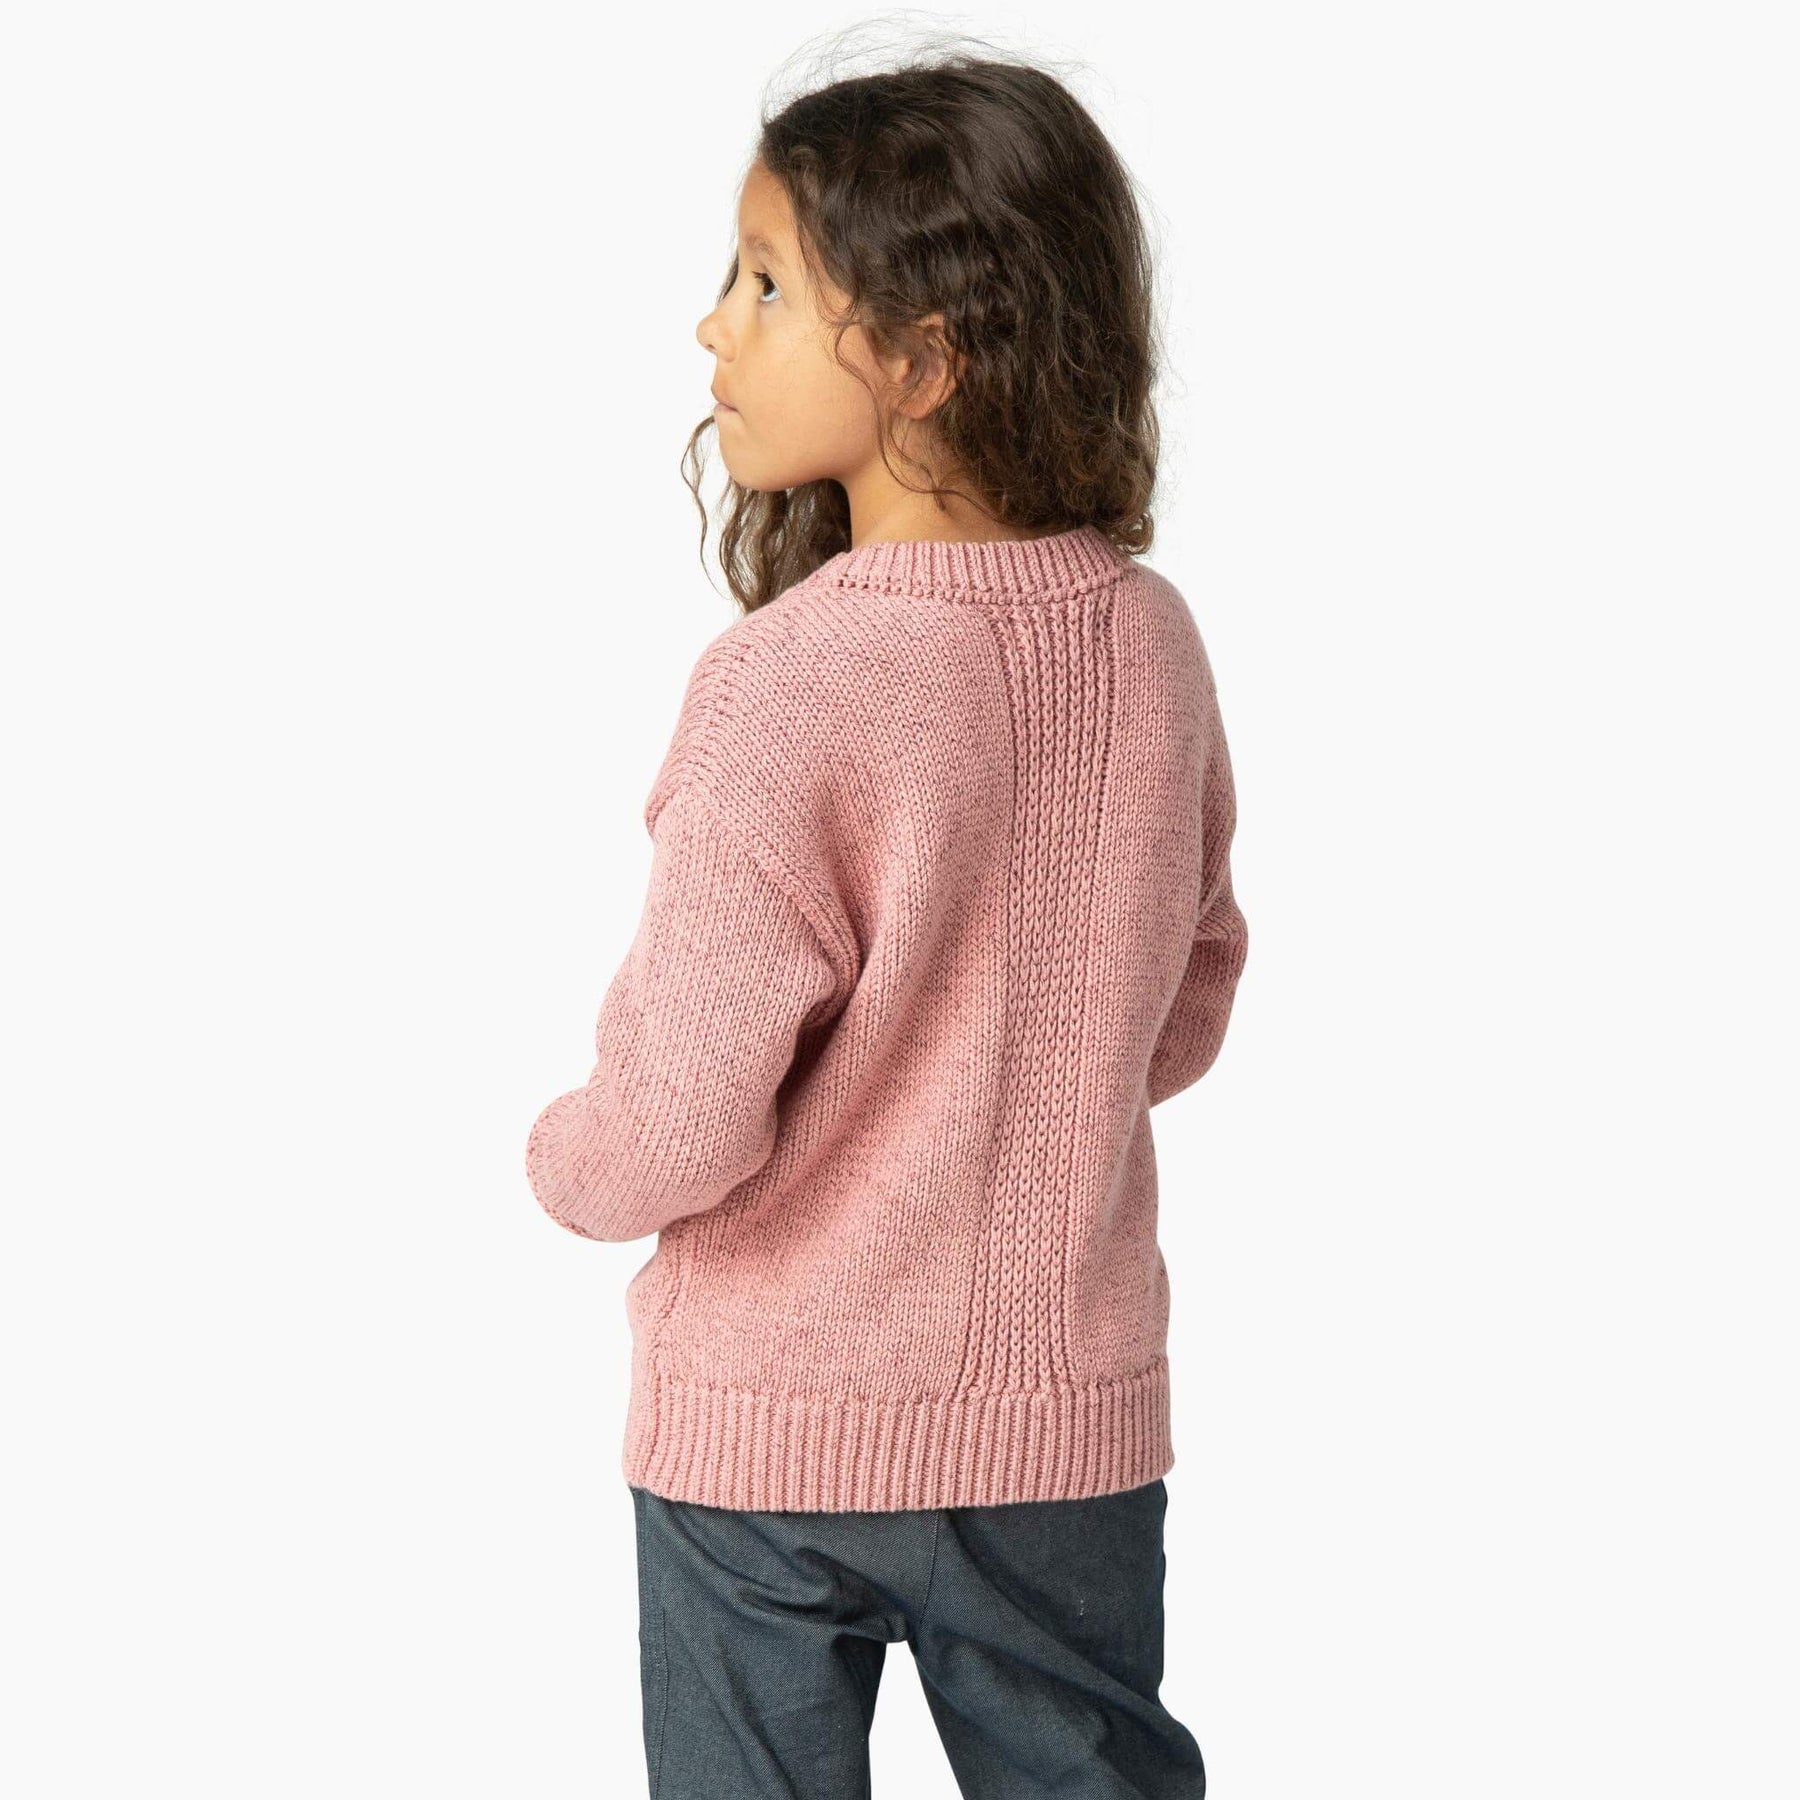 Marled Sweater, made from Firebird 100% Organic – Cotton. Italian